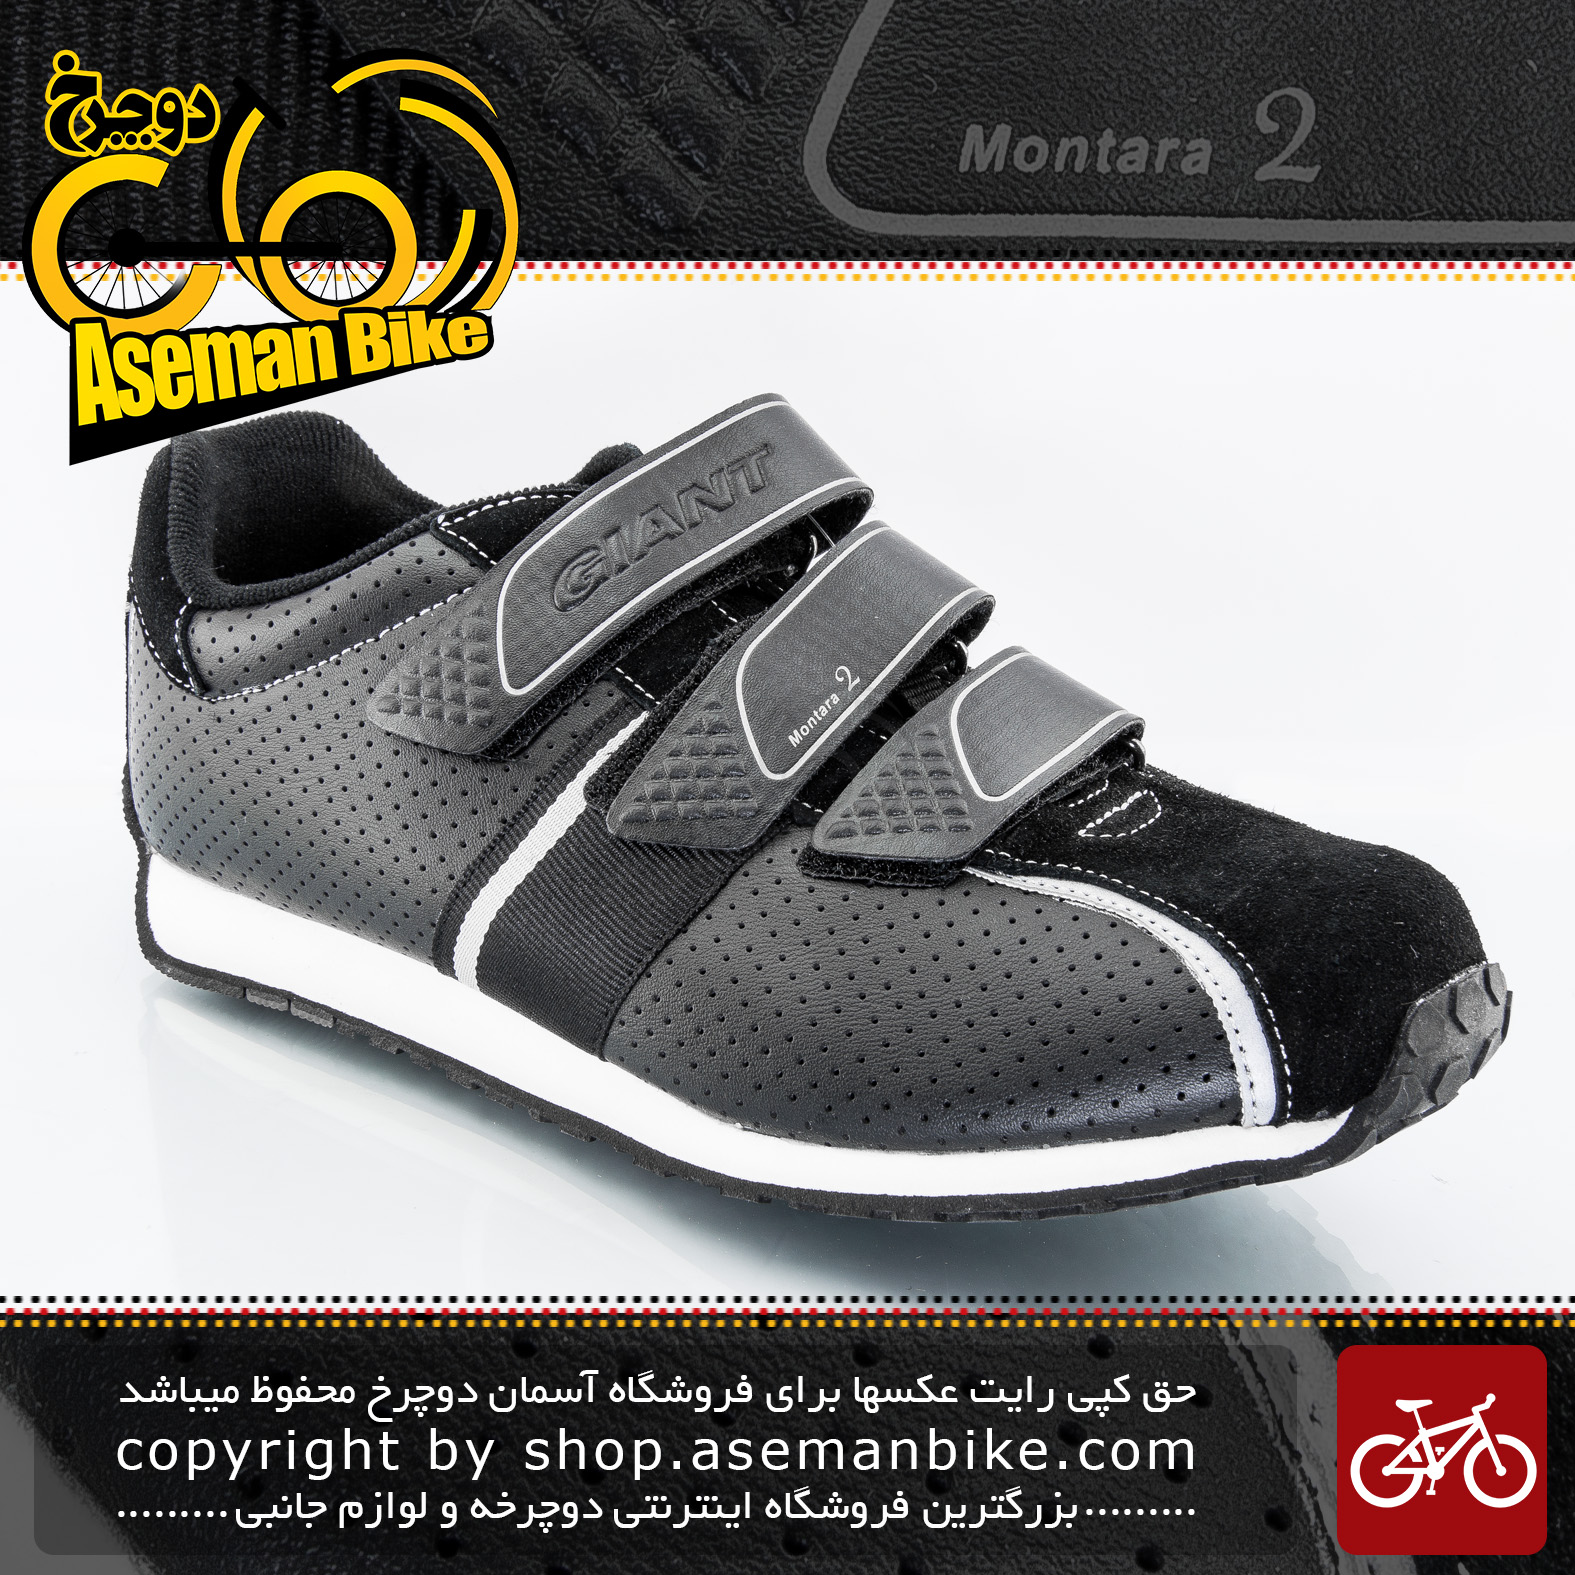 کفش دوچرخه سواری قفلی لاک کوهستان جاینت مدل مونتارا 2 Giant Bicycle Shoes Montara 2 SPD Lock Black